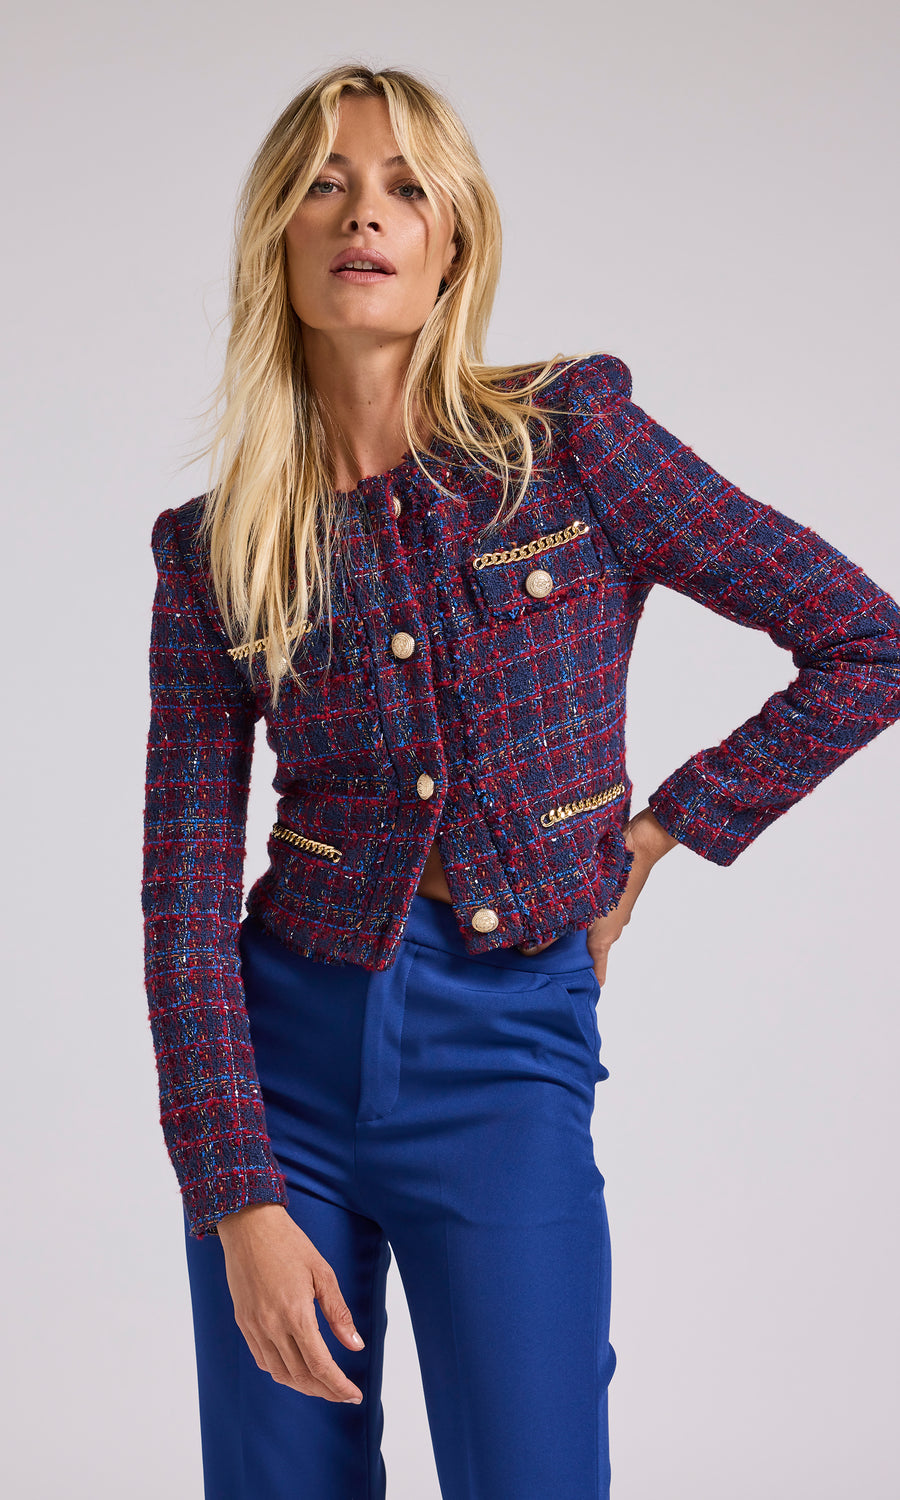 NWOT Generation Love Rosie Sequin Sleeve Jacket size XS | eBay